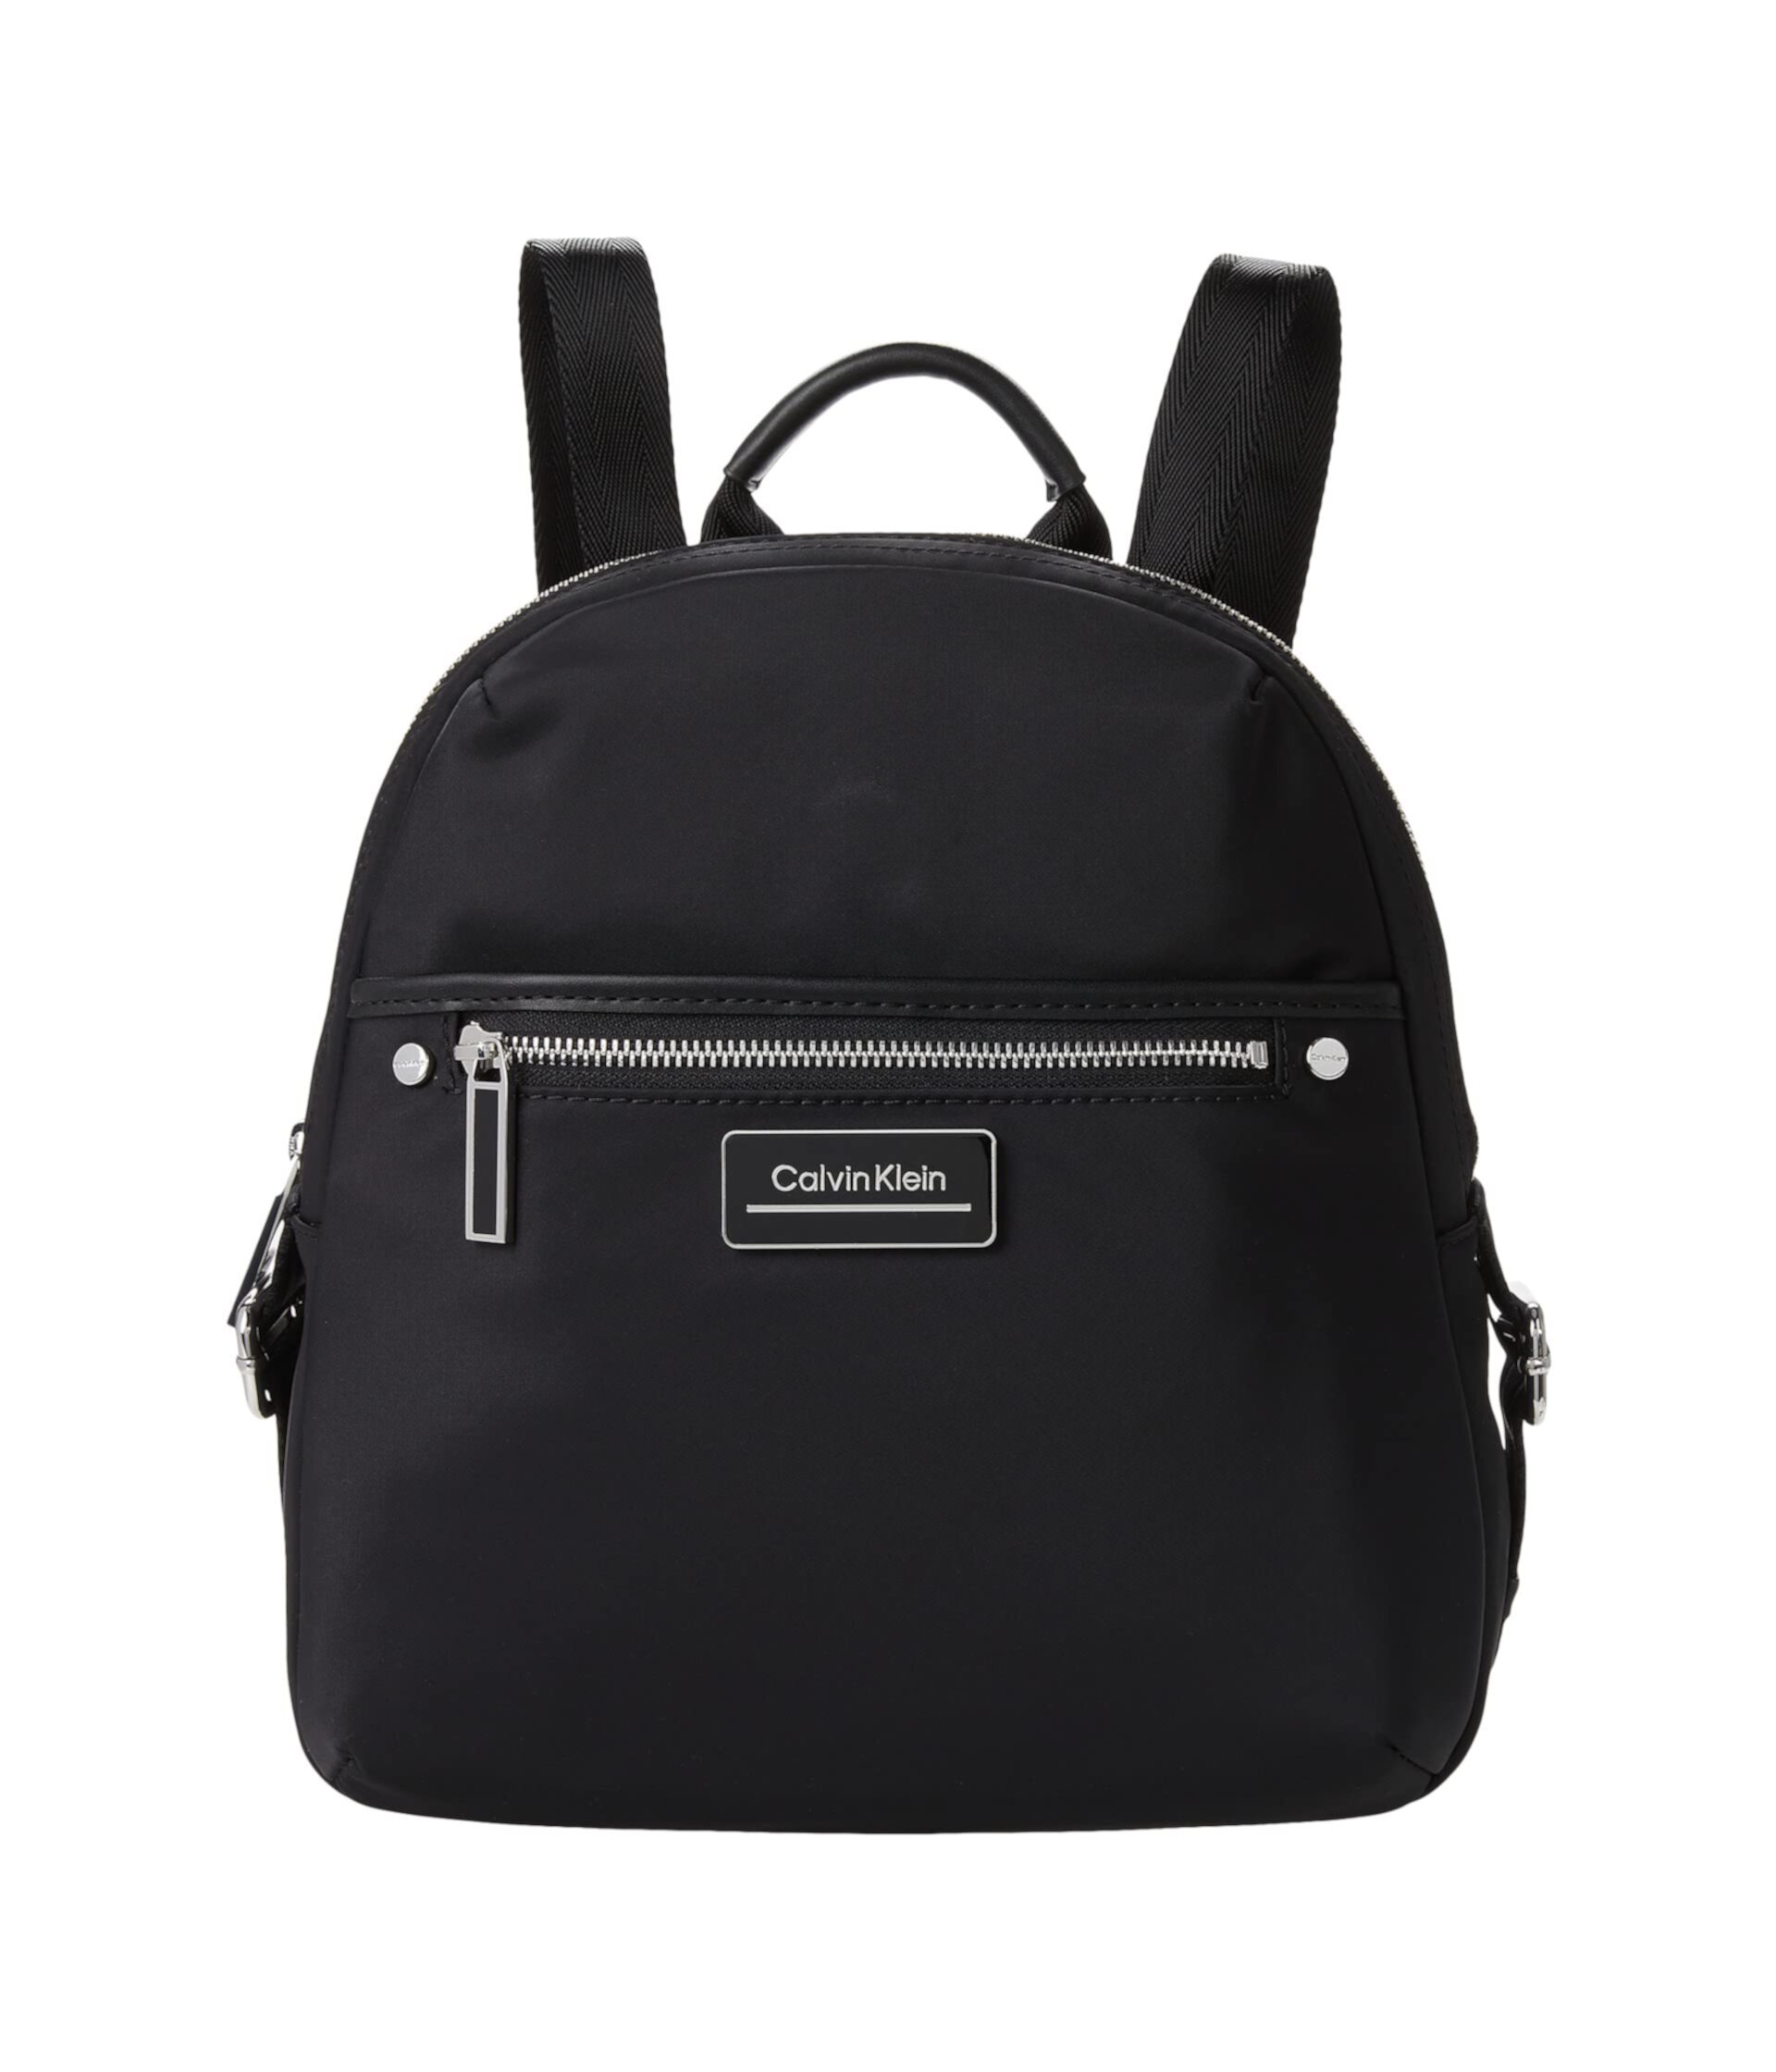 Sussex Nylon Backpack Calvin Klein